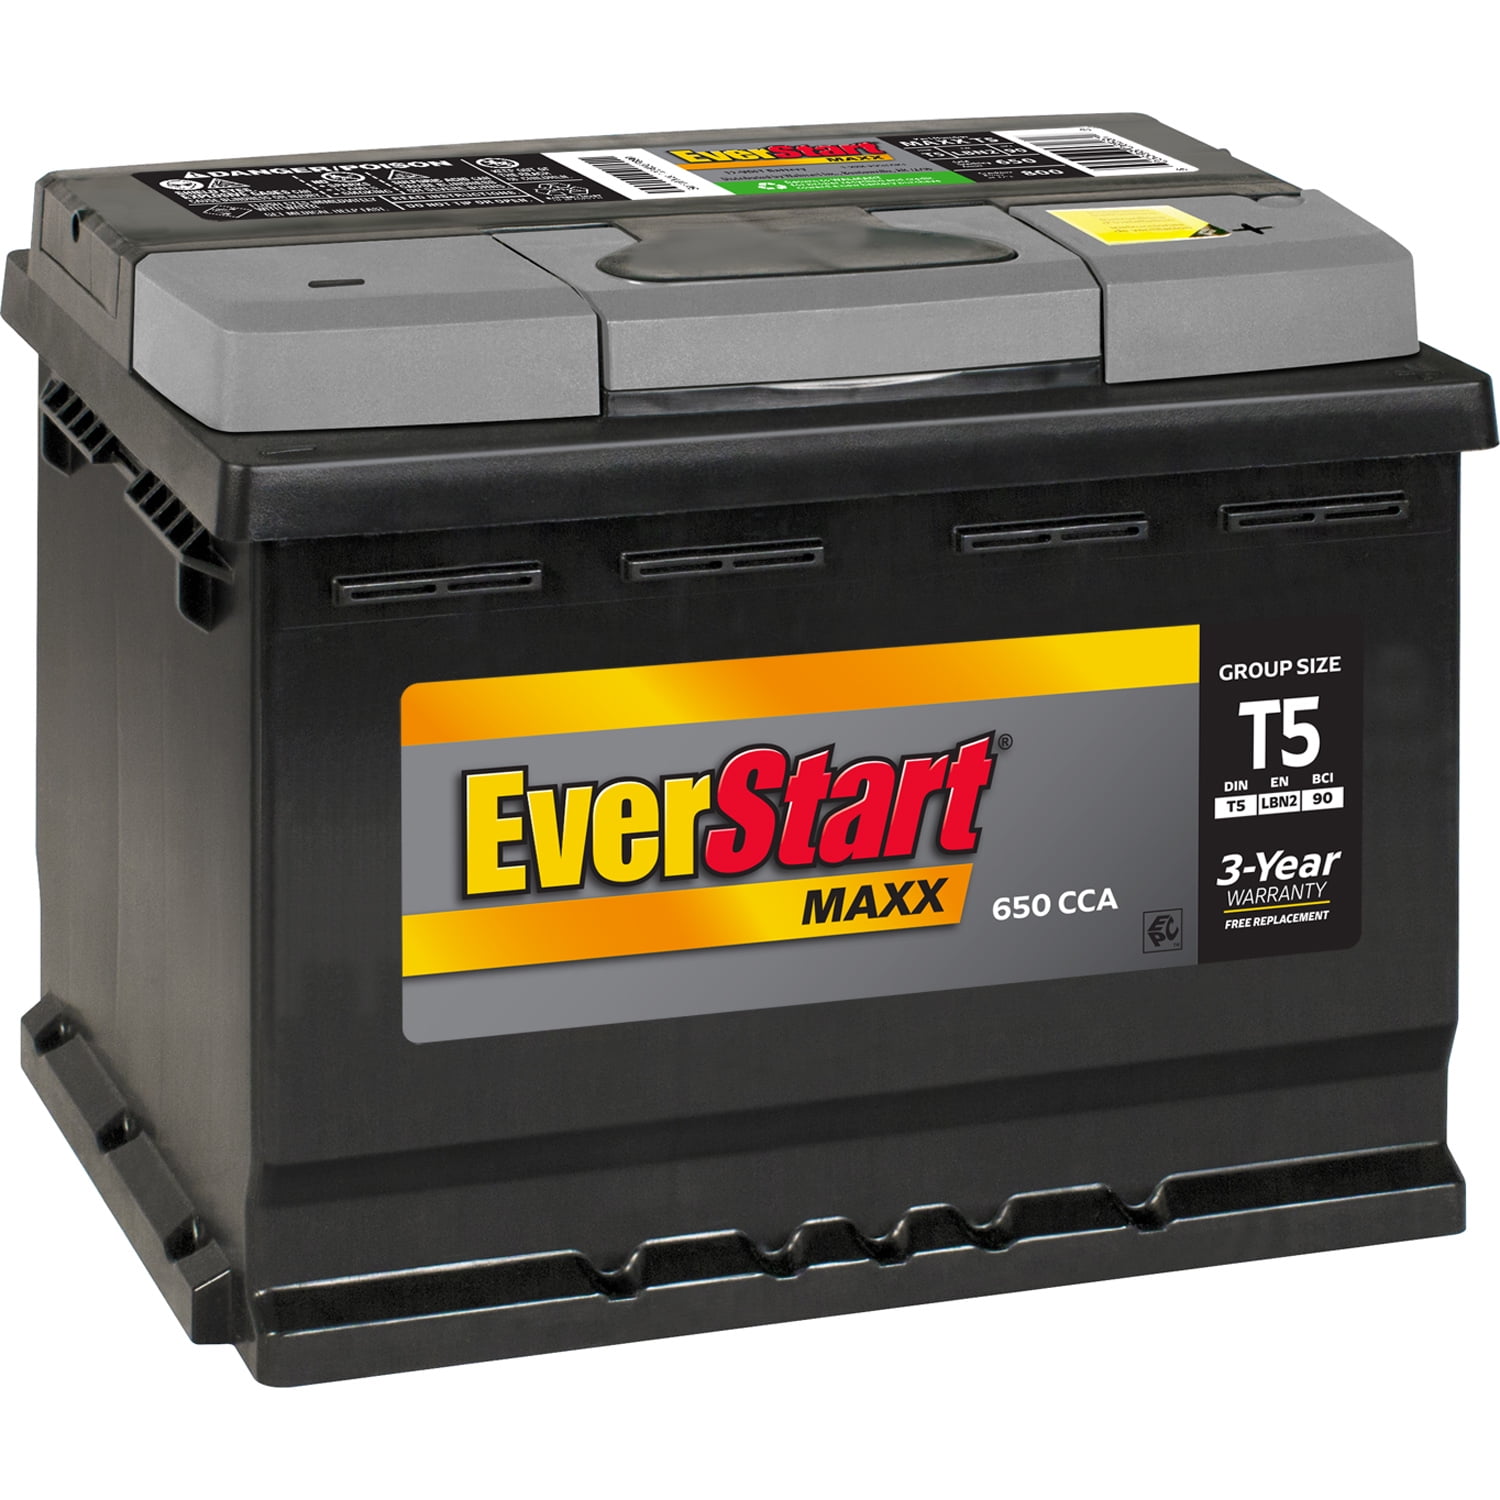 Everstart Maxx Lead Acid Automotive Battery Group Size T5